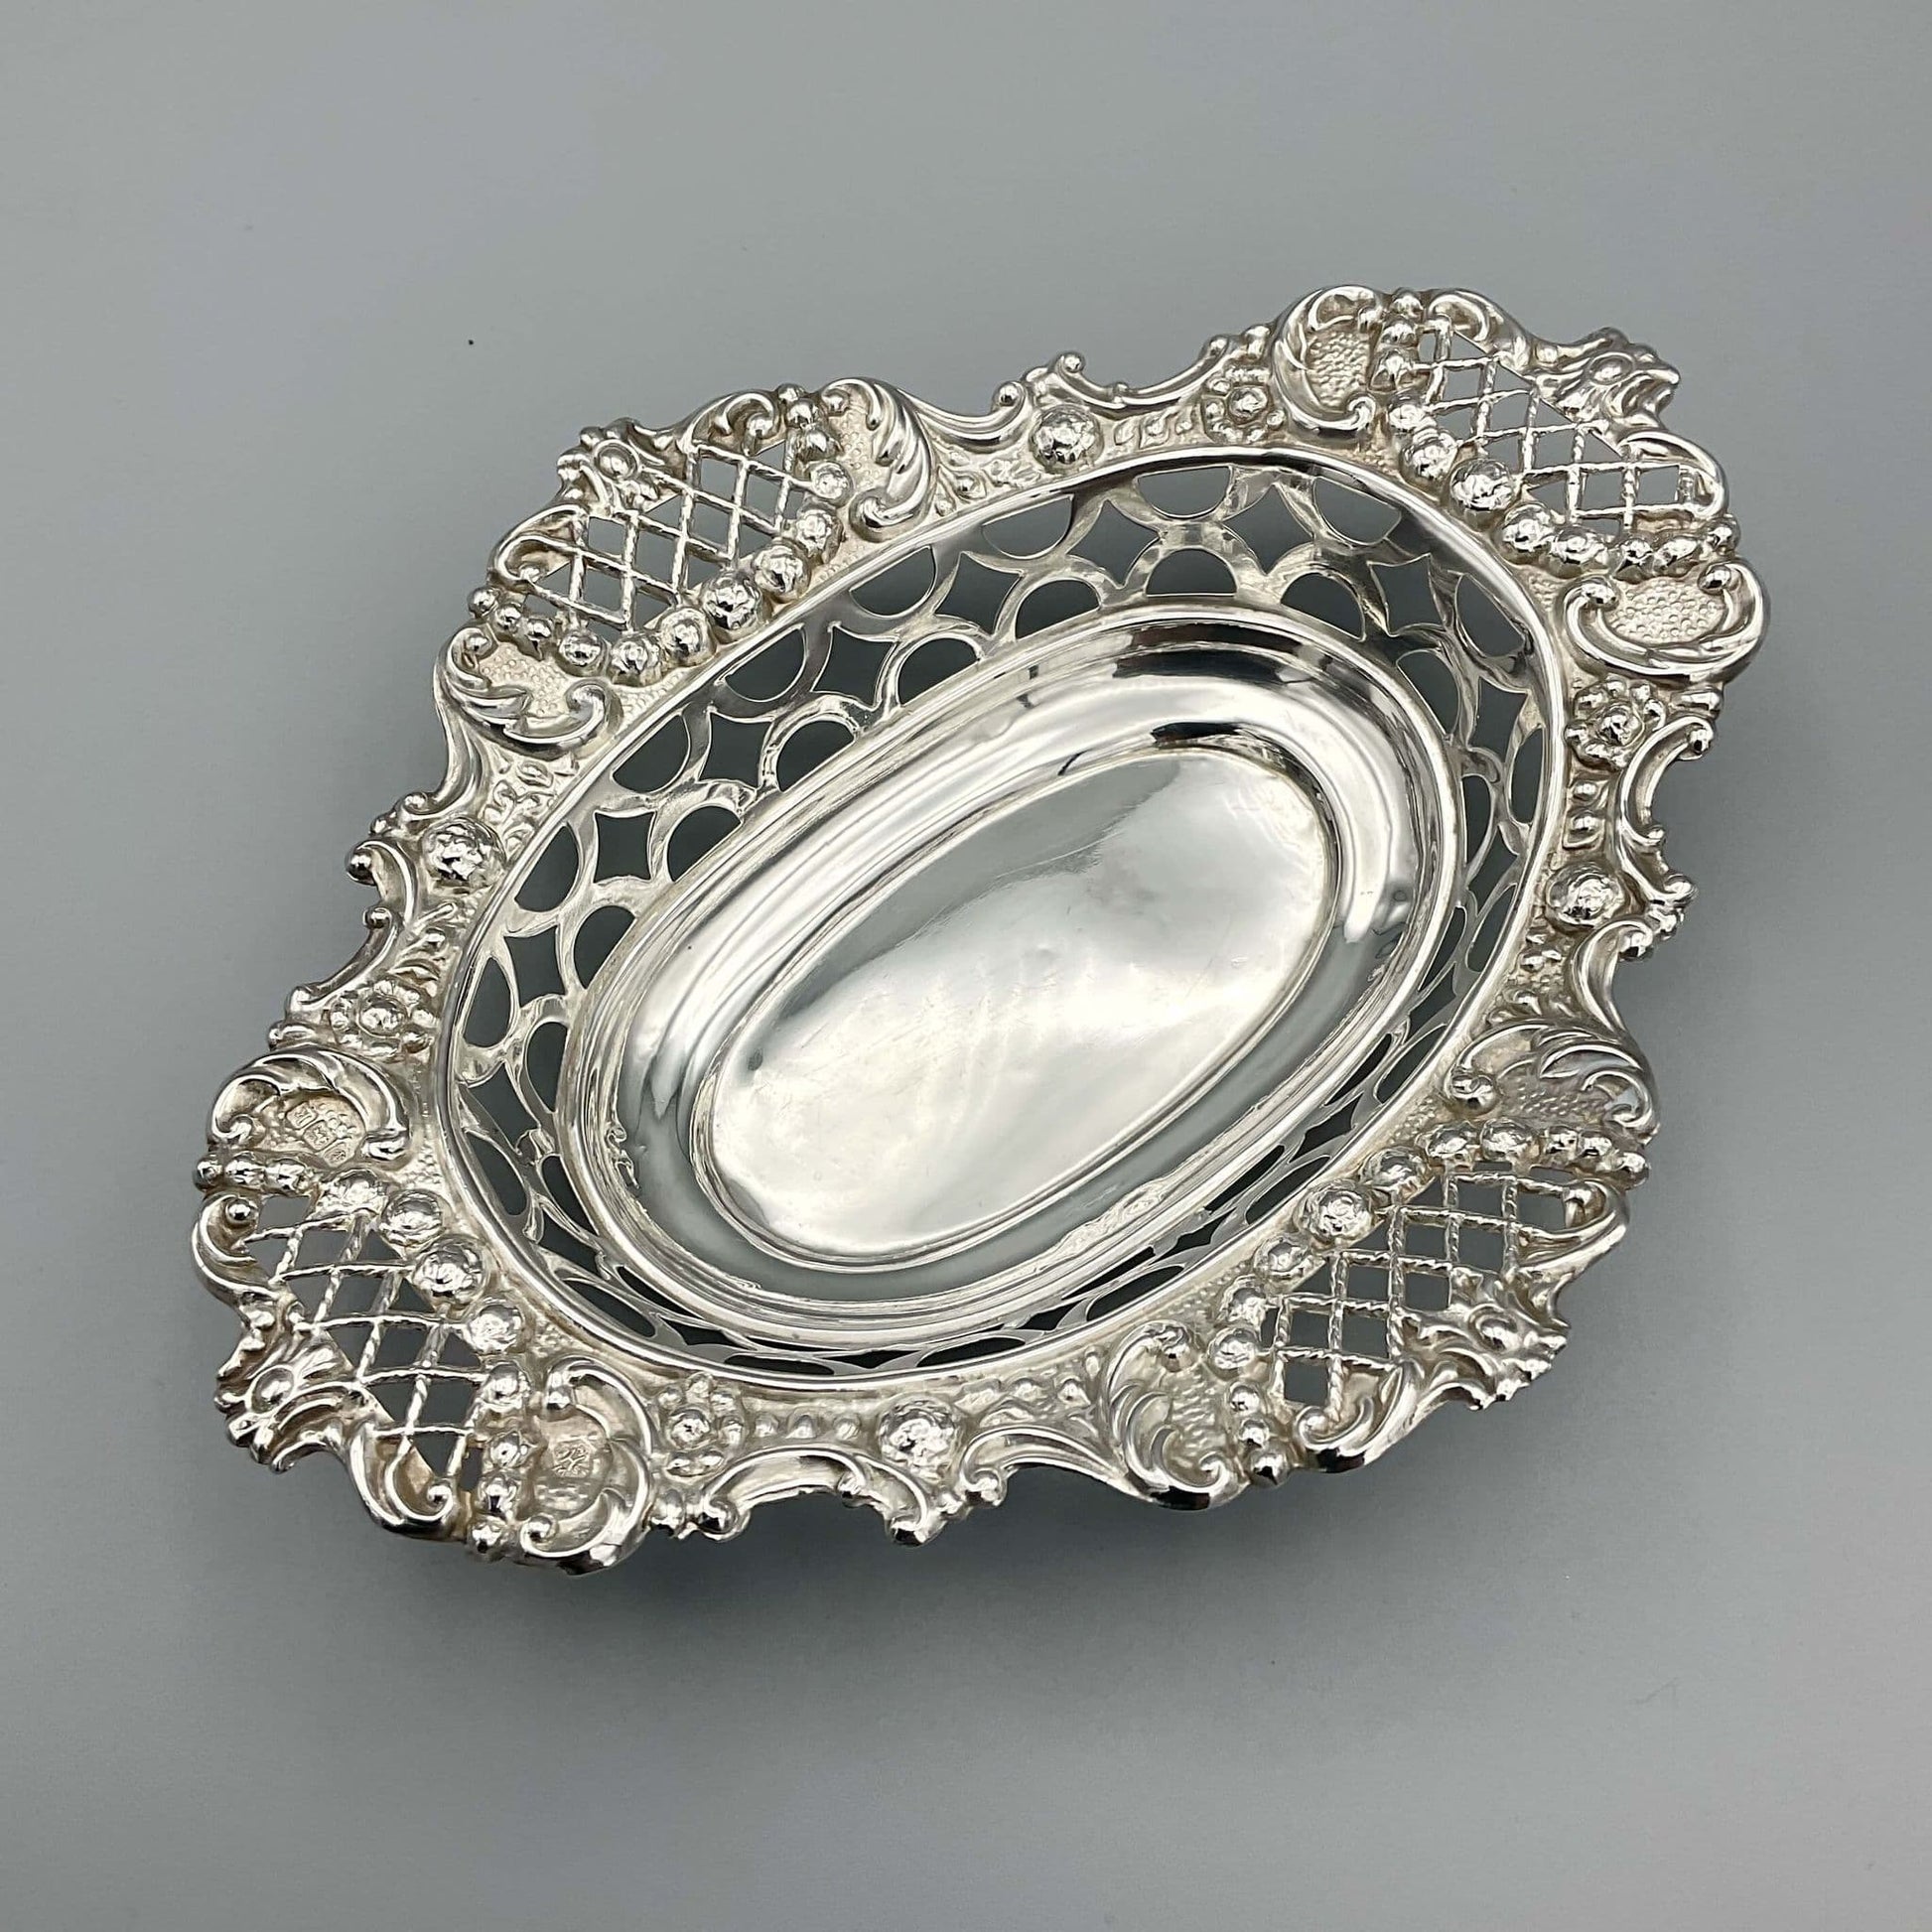 Ornate silver pierced bowl on grey background